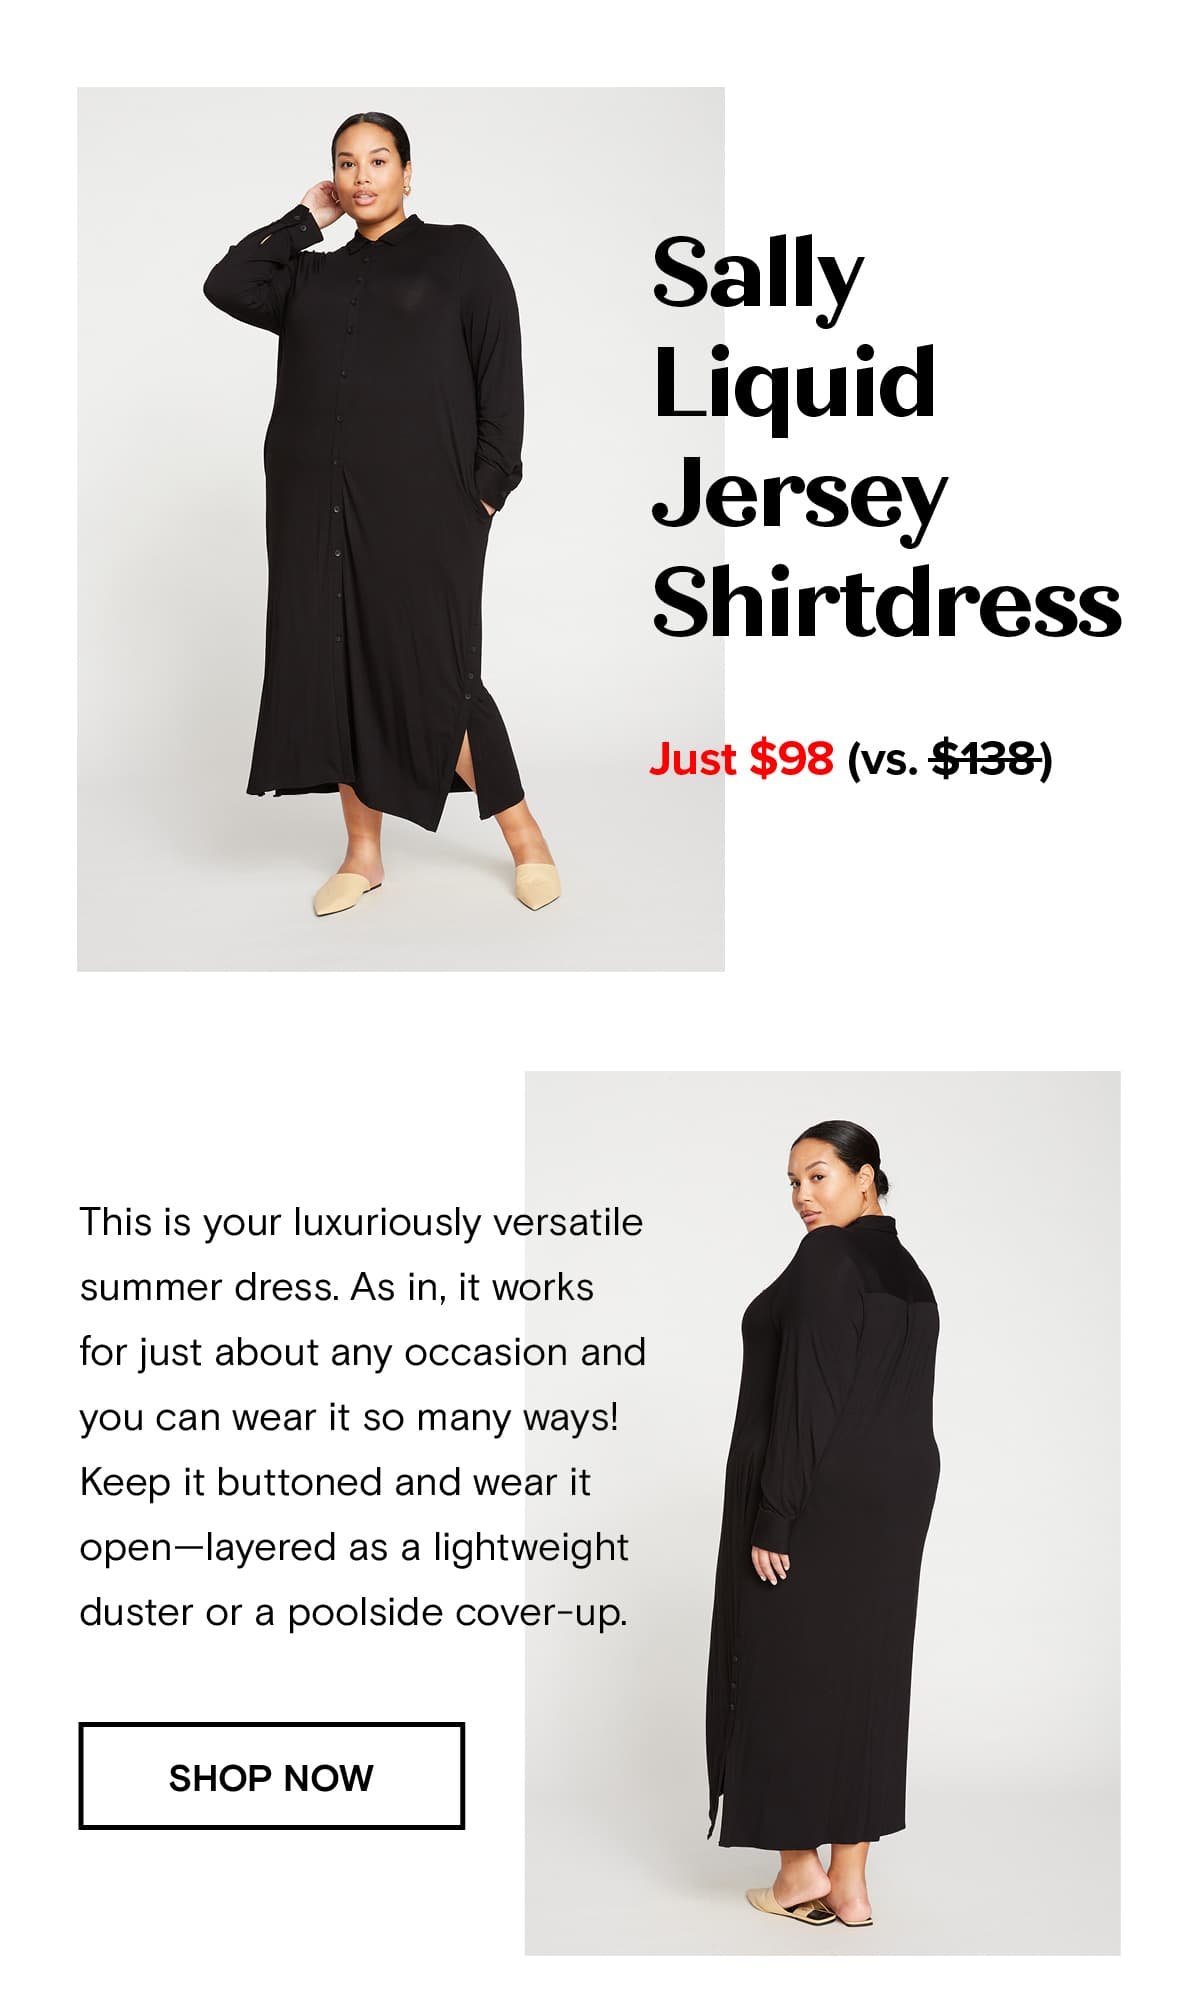 Sally Liquid Jersey Shirtdress Just $98 (vs. $138)